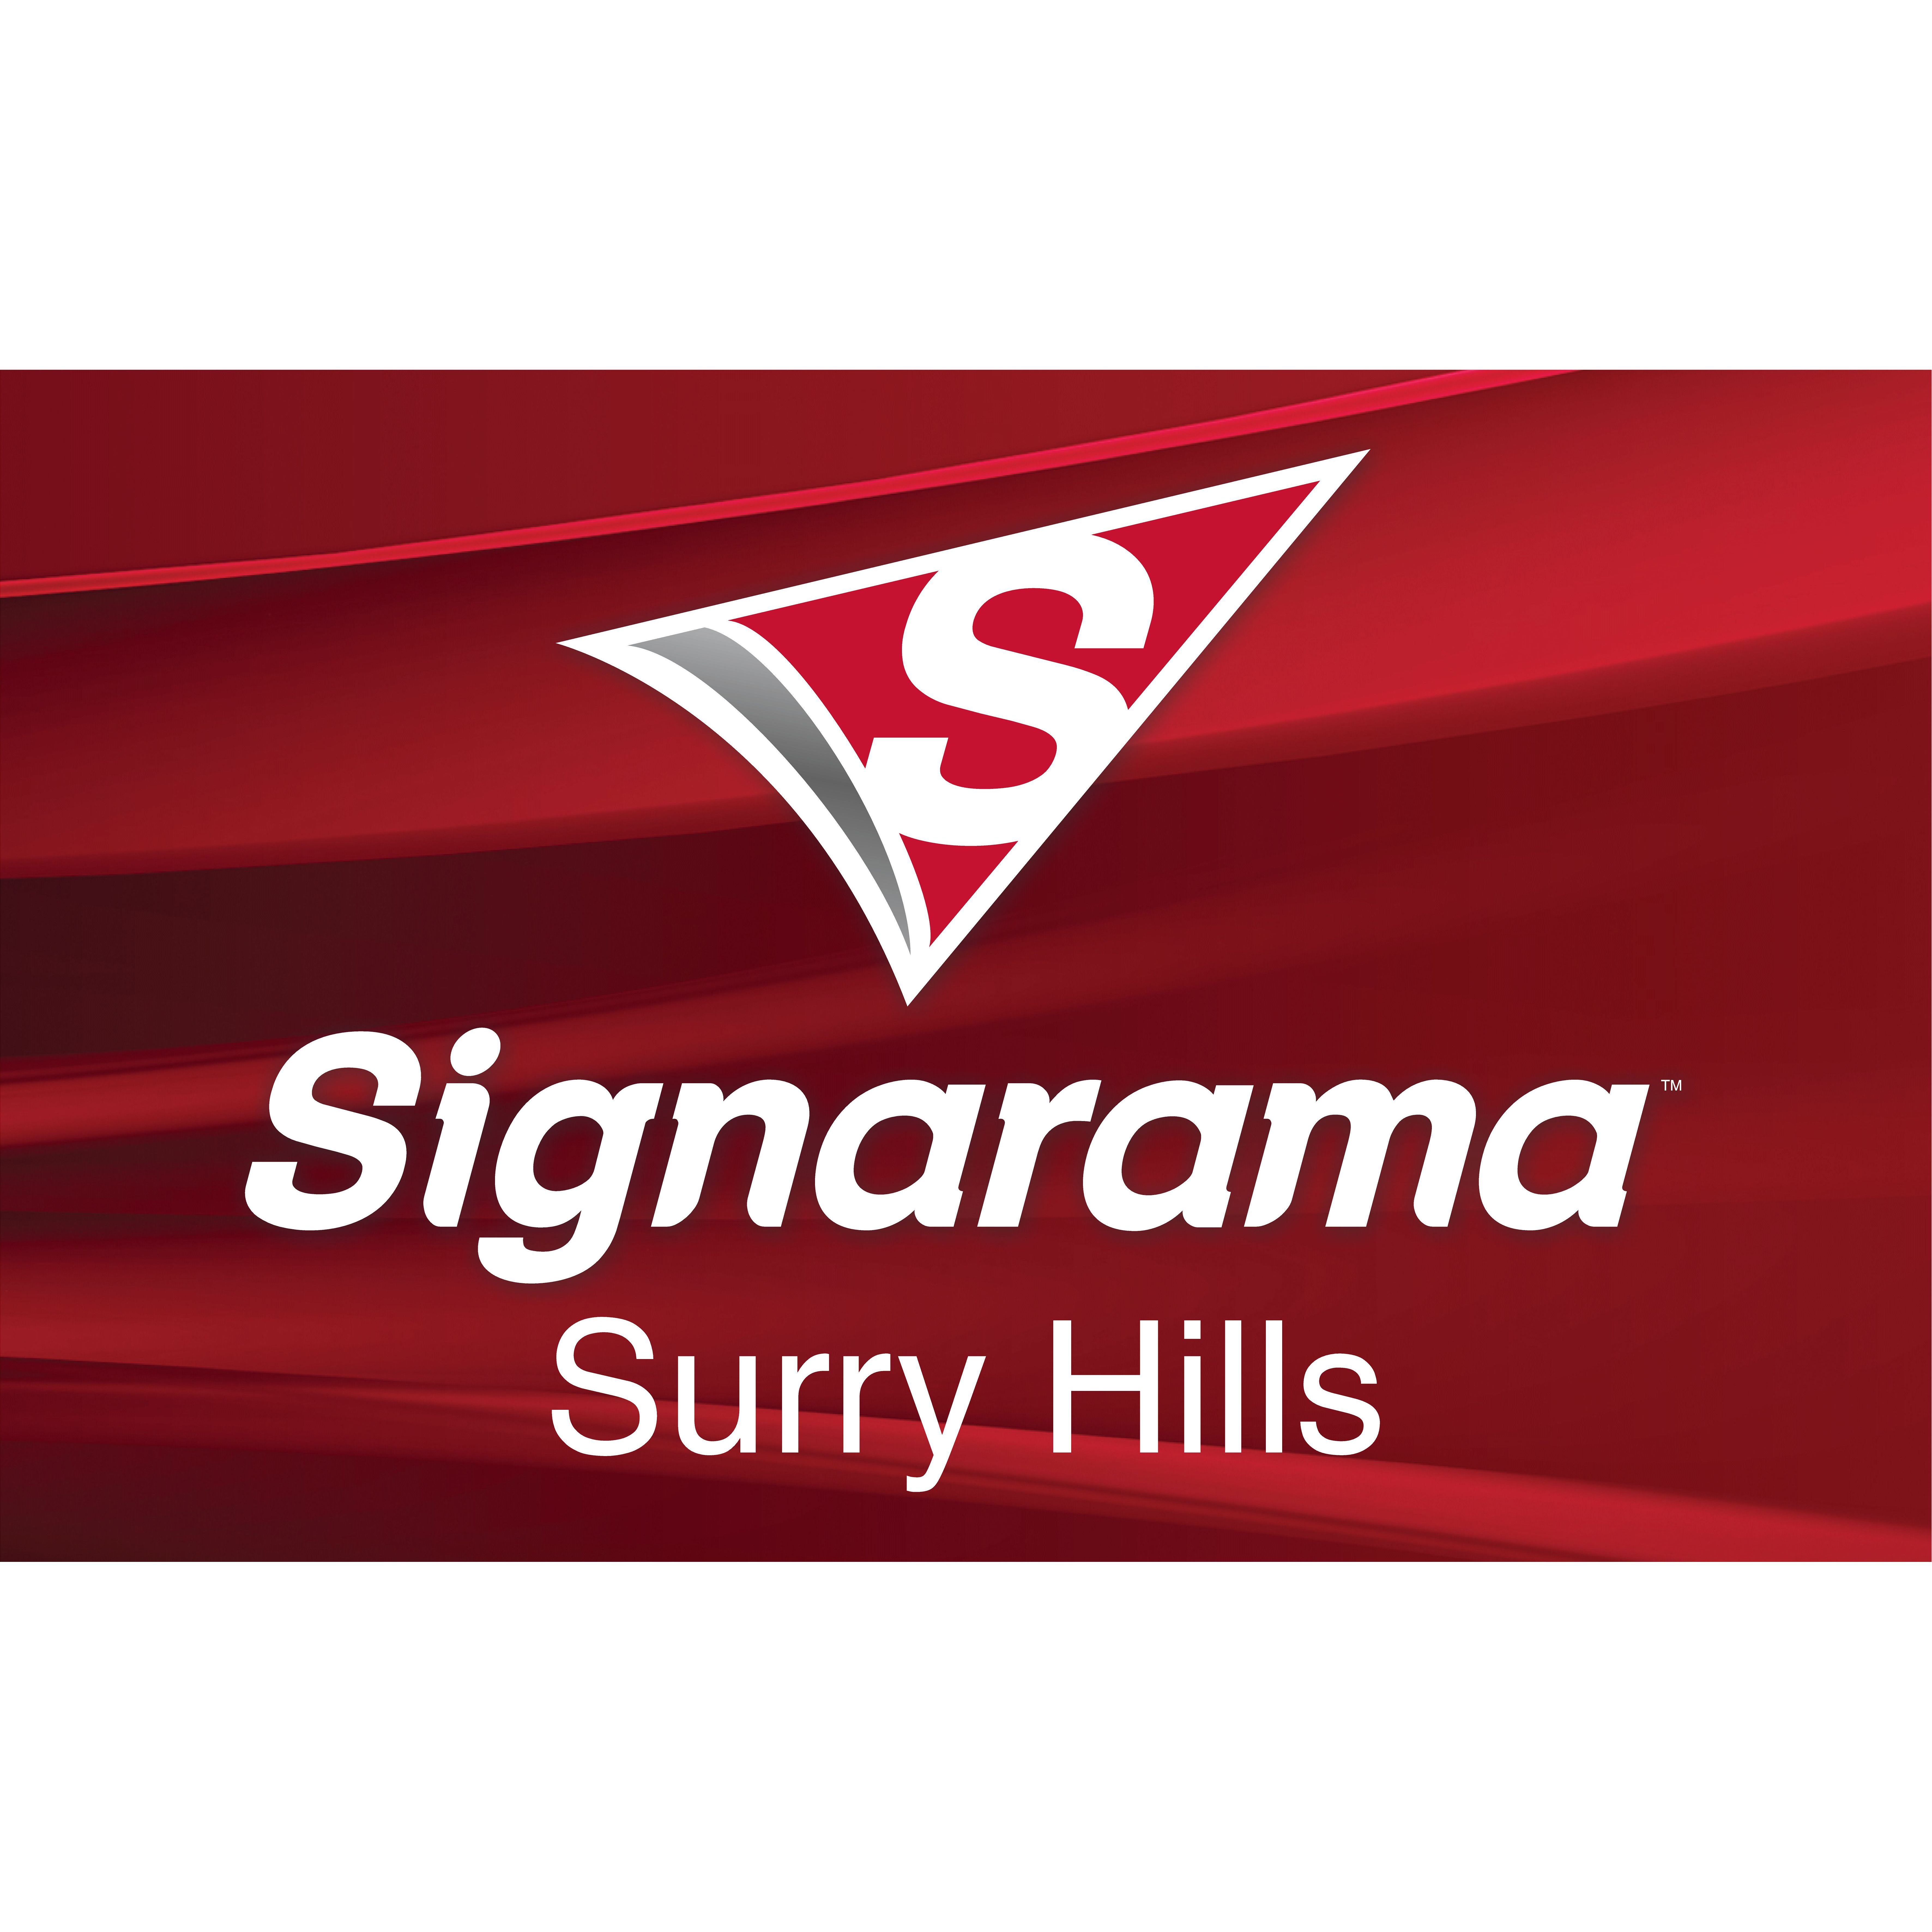 Signarama Surry Hills  Inner Sydney Signs Logo